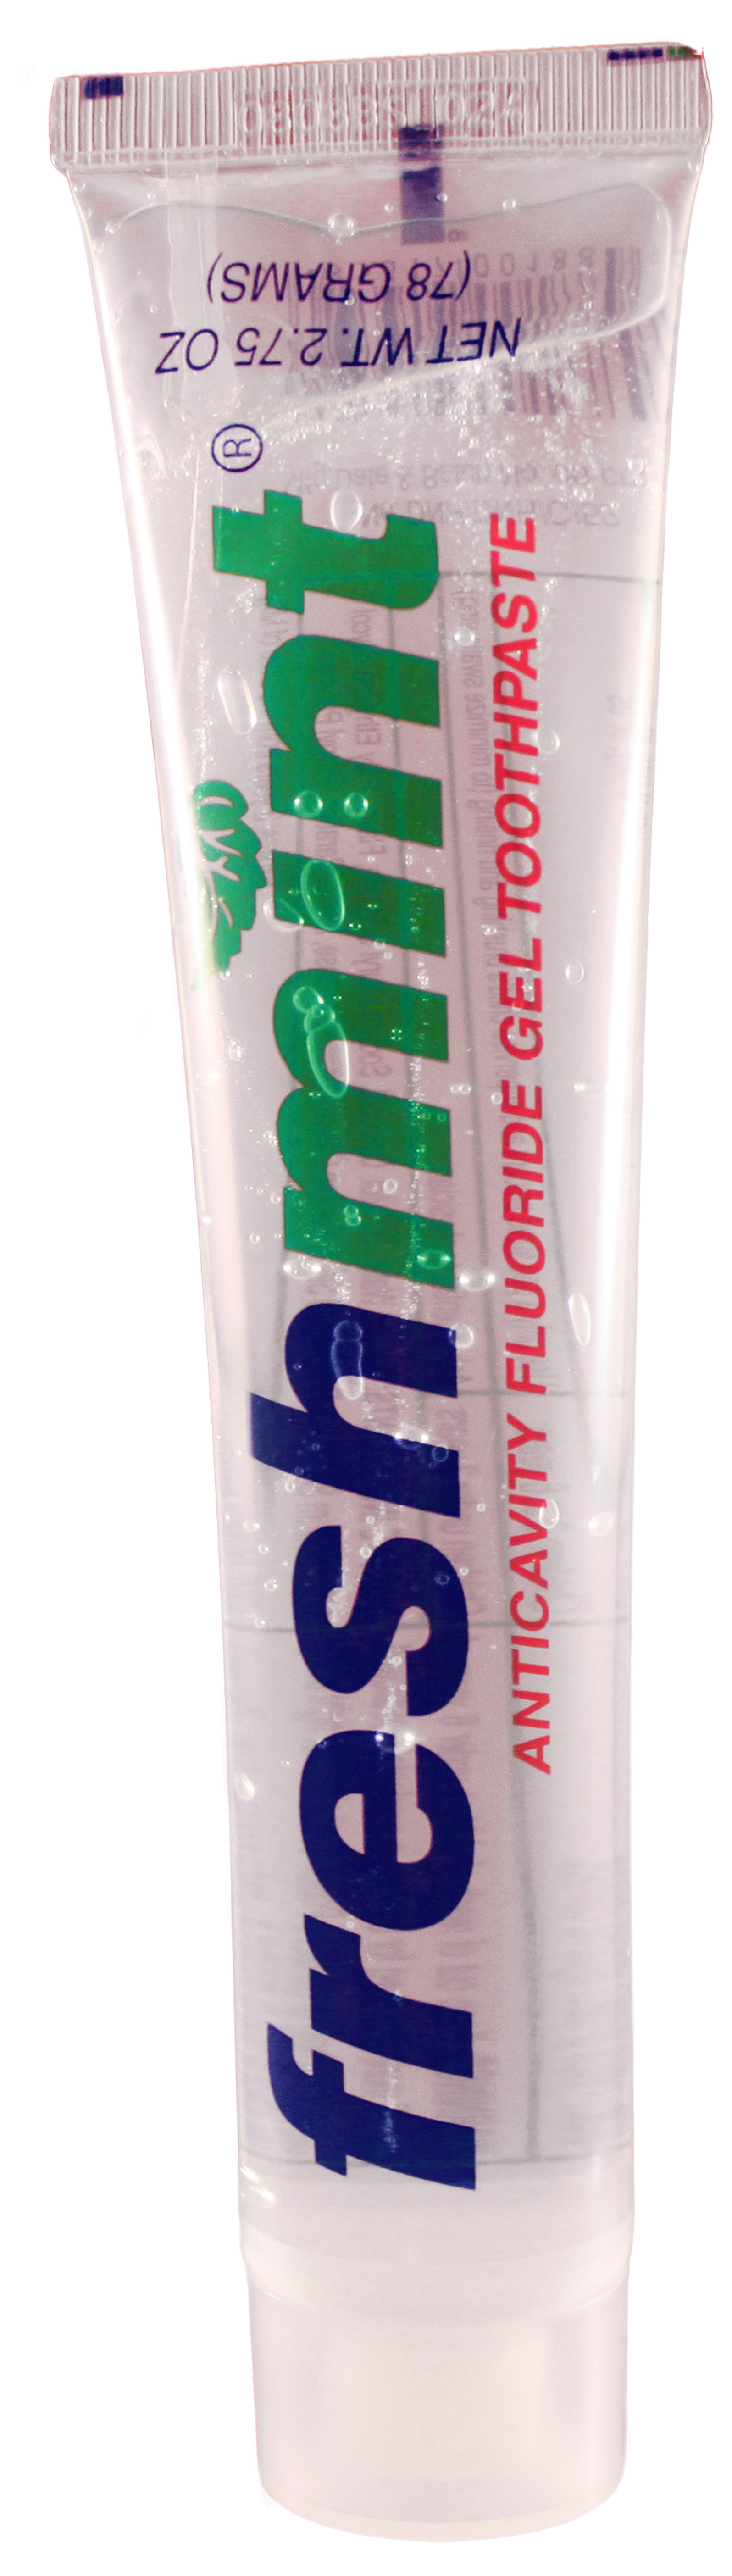 Freshmint 2.75 oz. Clear Gel Anticavity Fluoride Toothpaste